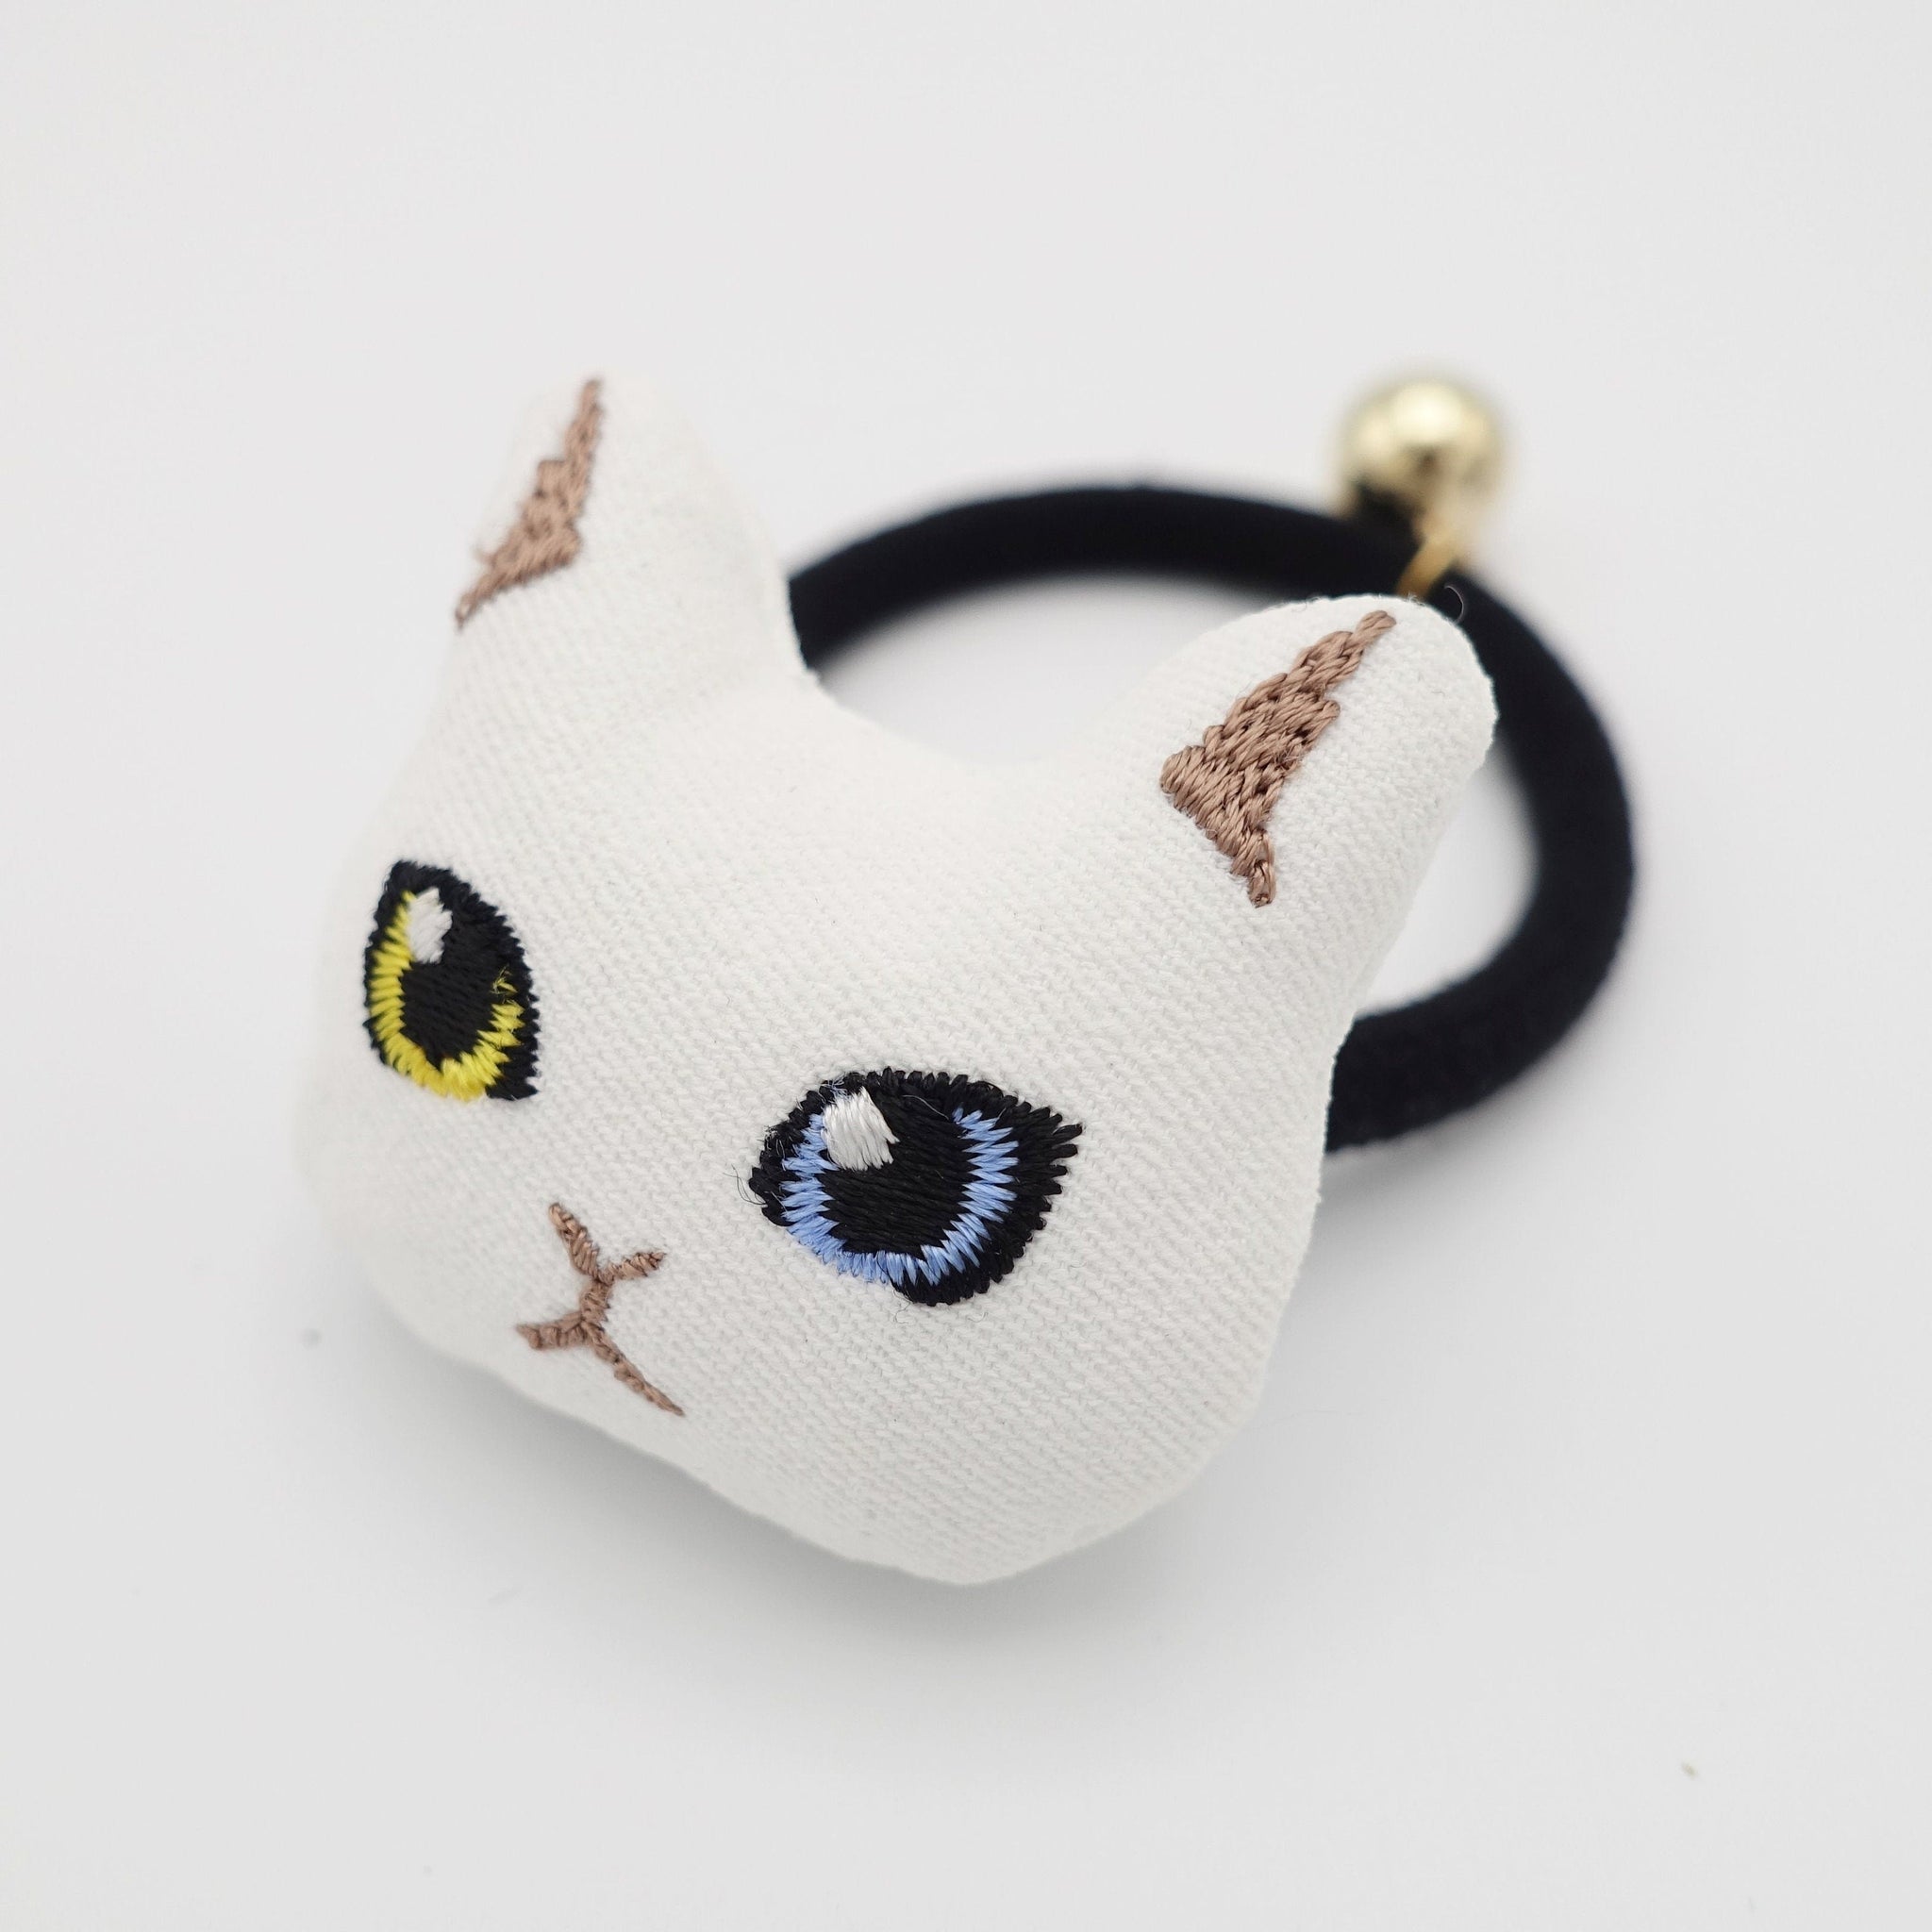 VeryShine cat embroidery hair elastic character ponytail holder hair ties